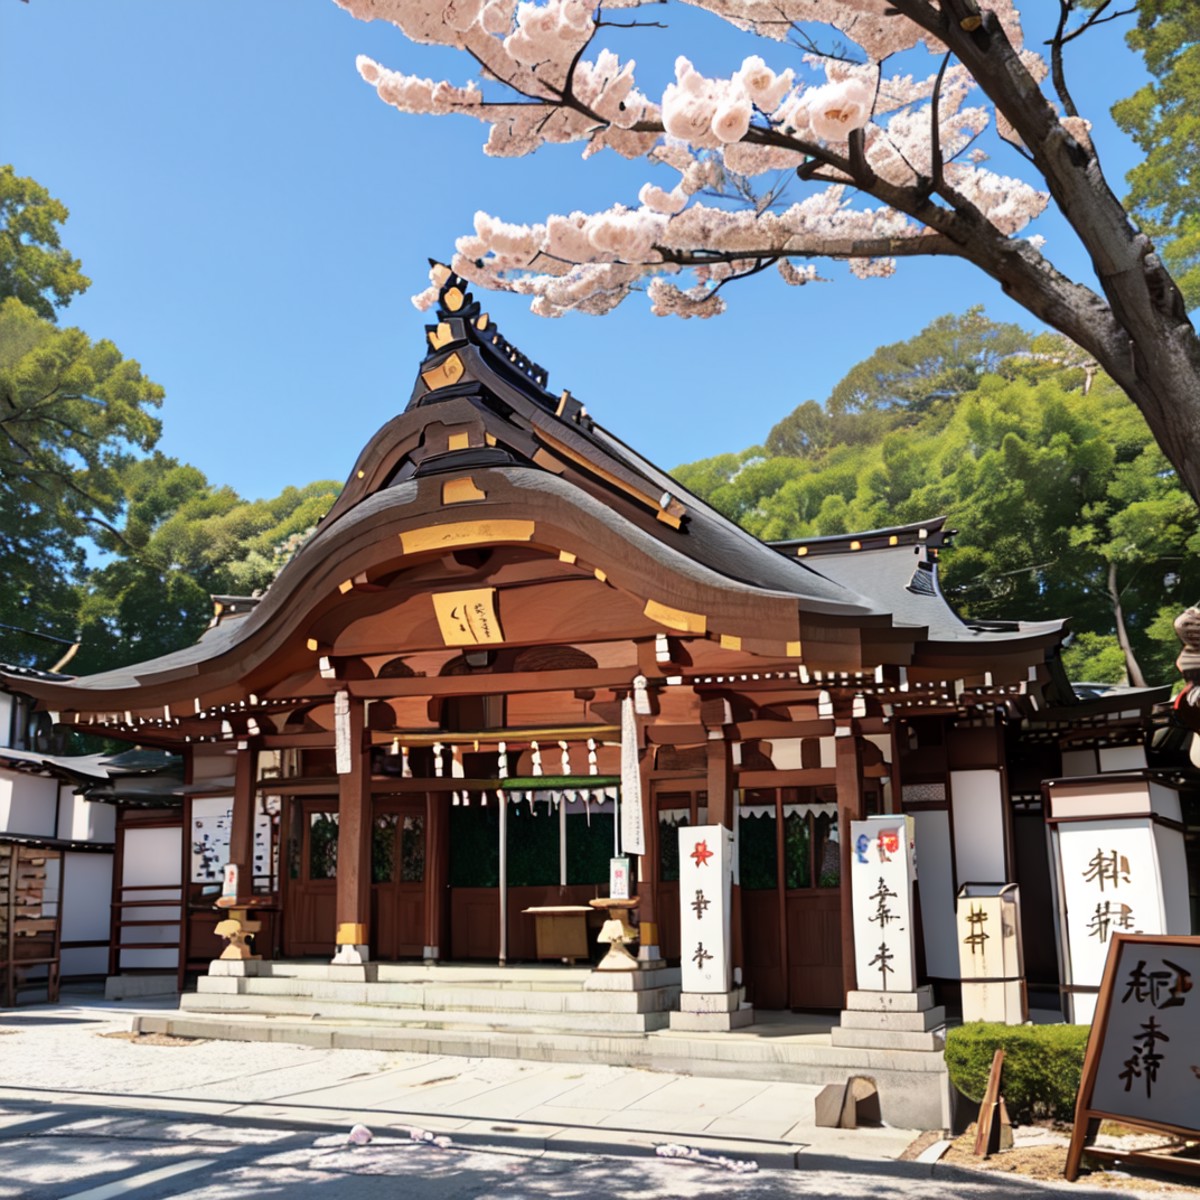 best quality, ultra-detailed, illustration,
jinzya, tree, outdoors, shrine, scenery, day, shimenawa, cherry blossoms, real...